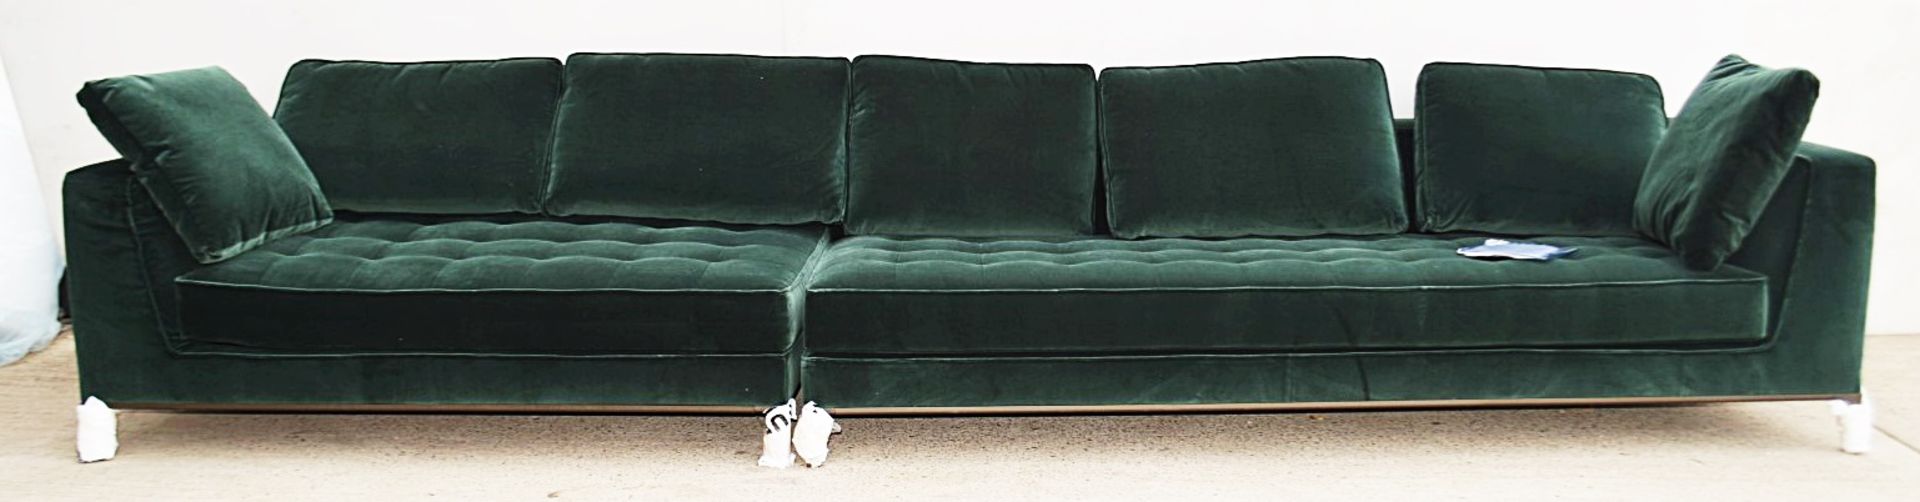 2 x B&B Italia MAXALTO Luxury Sofa Sections Both Upholstered In Rich Dark Green Velvet - RRP £7,248 - Image 2 of 13